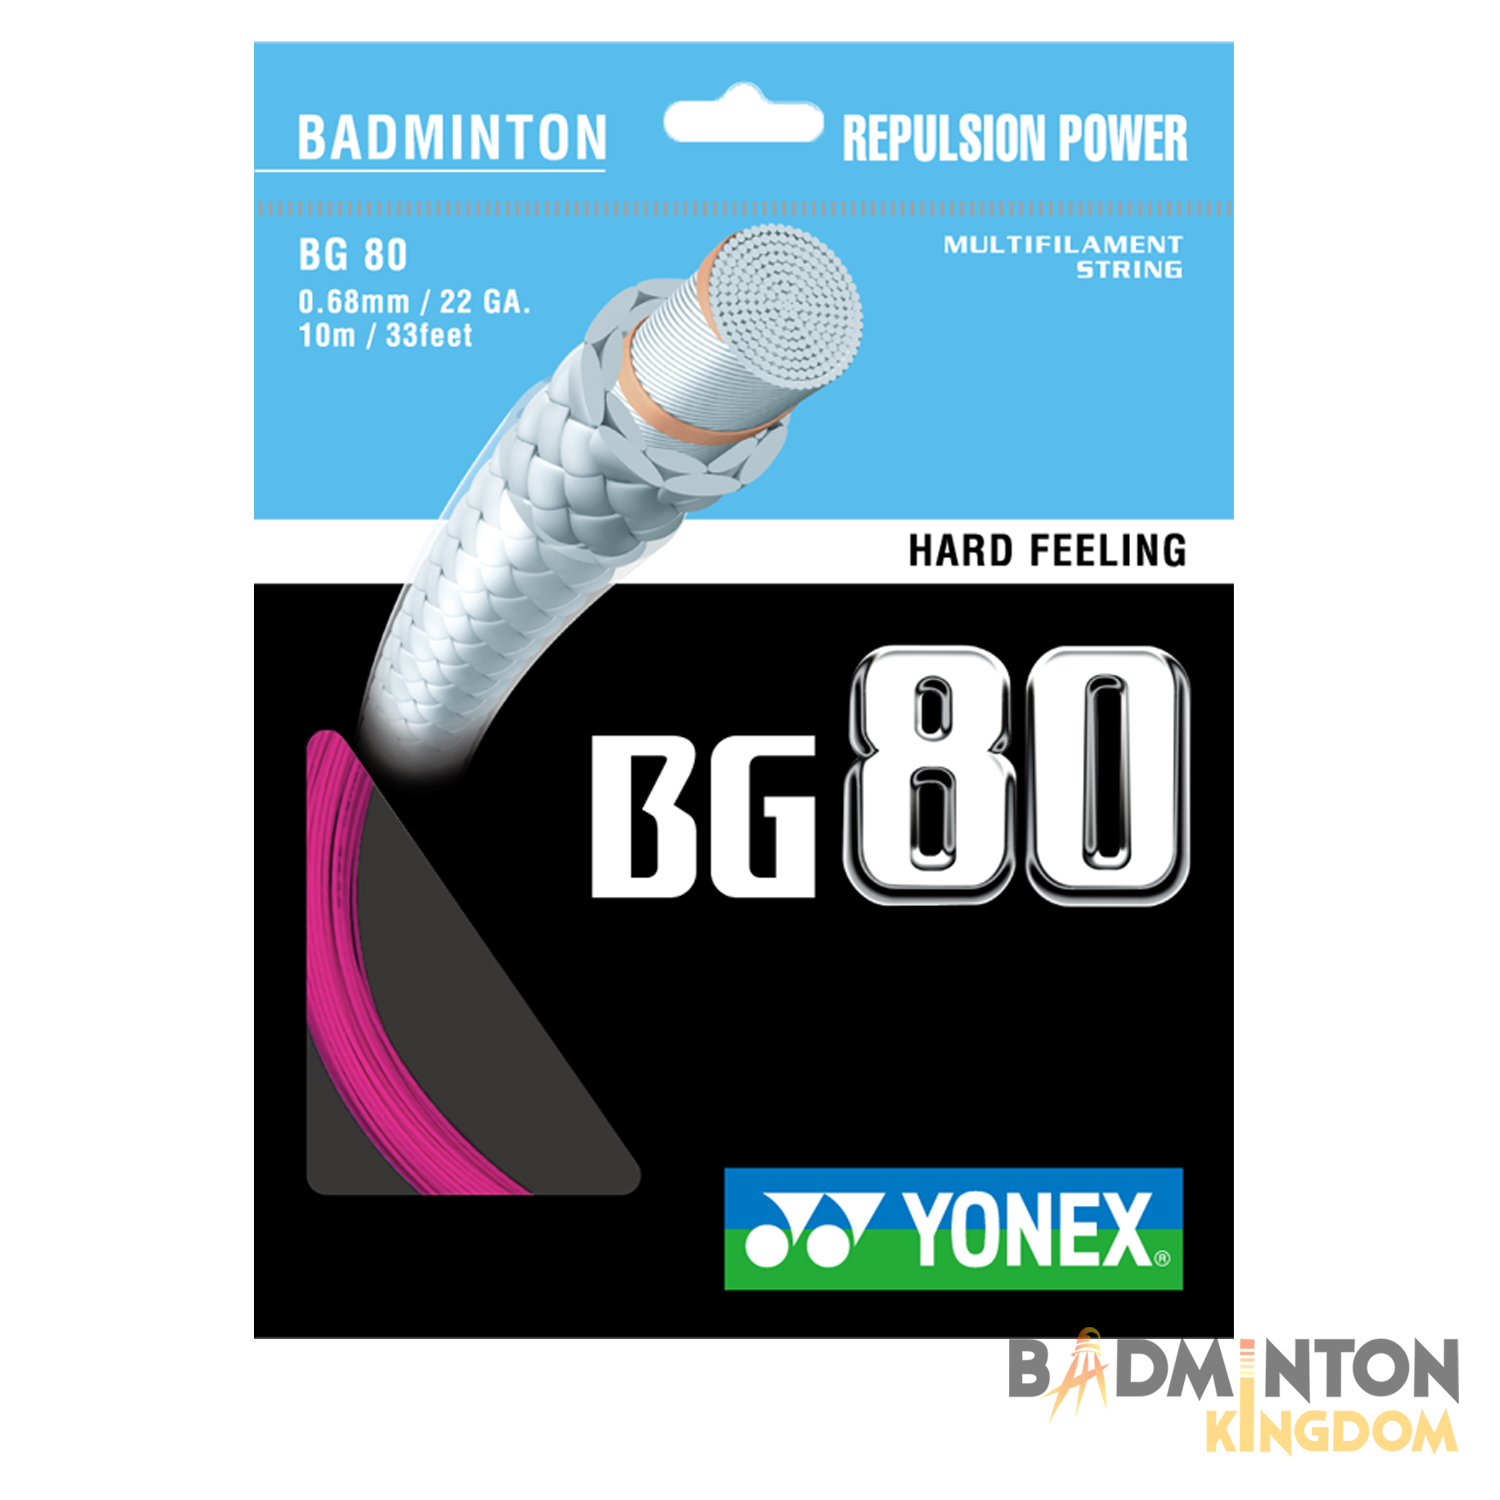 yonex-bg80-badminton-string-single-set